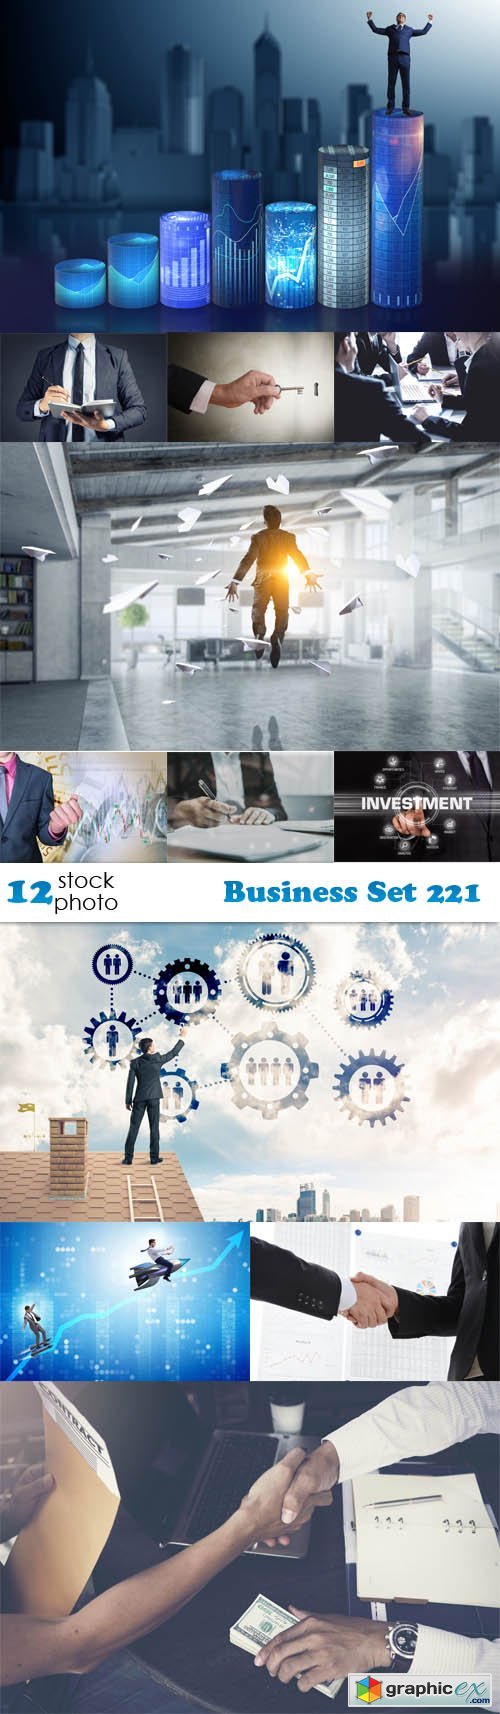 Business Set 221